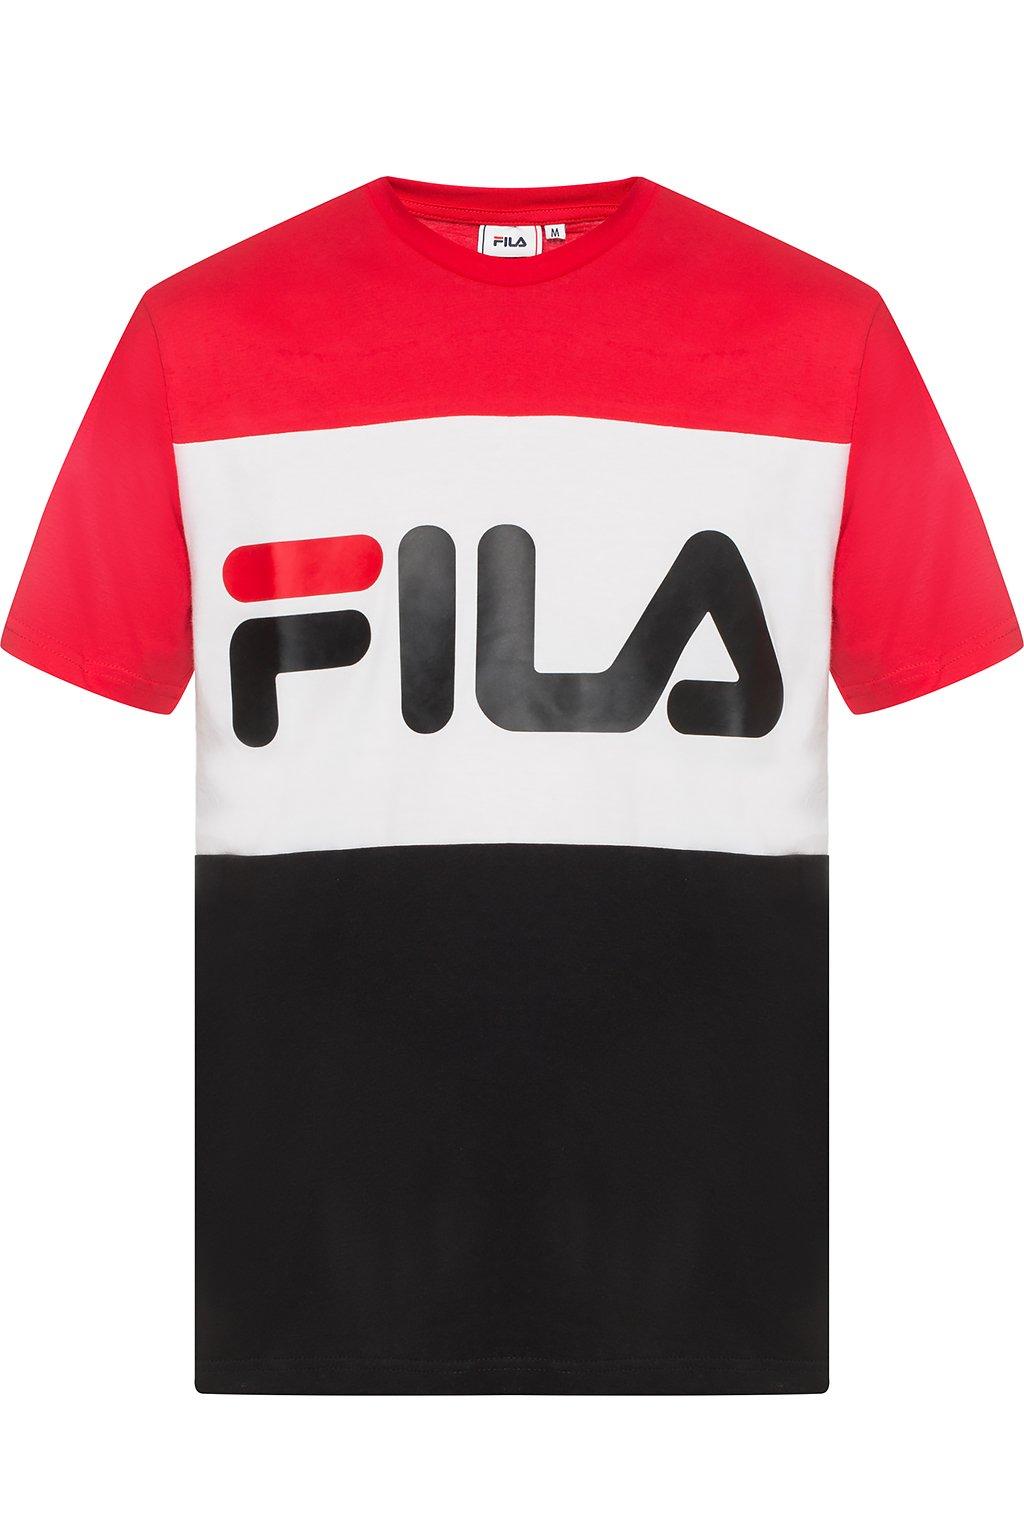 Fila Cotton Day Colour-block T-shirt in Black for Men - Lyst